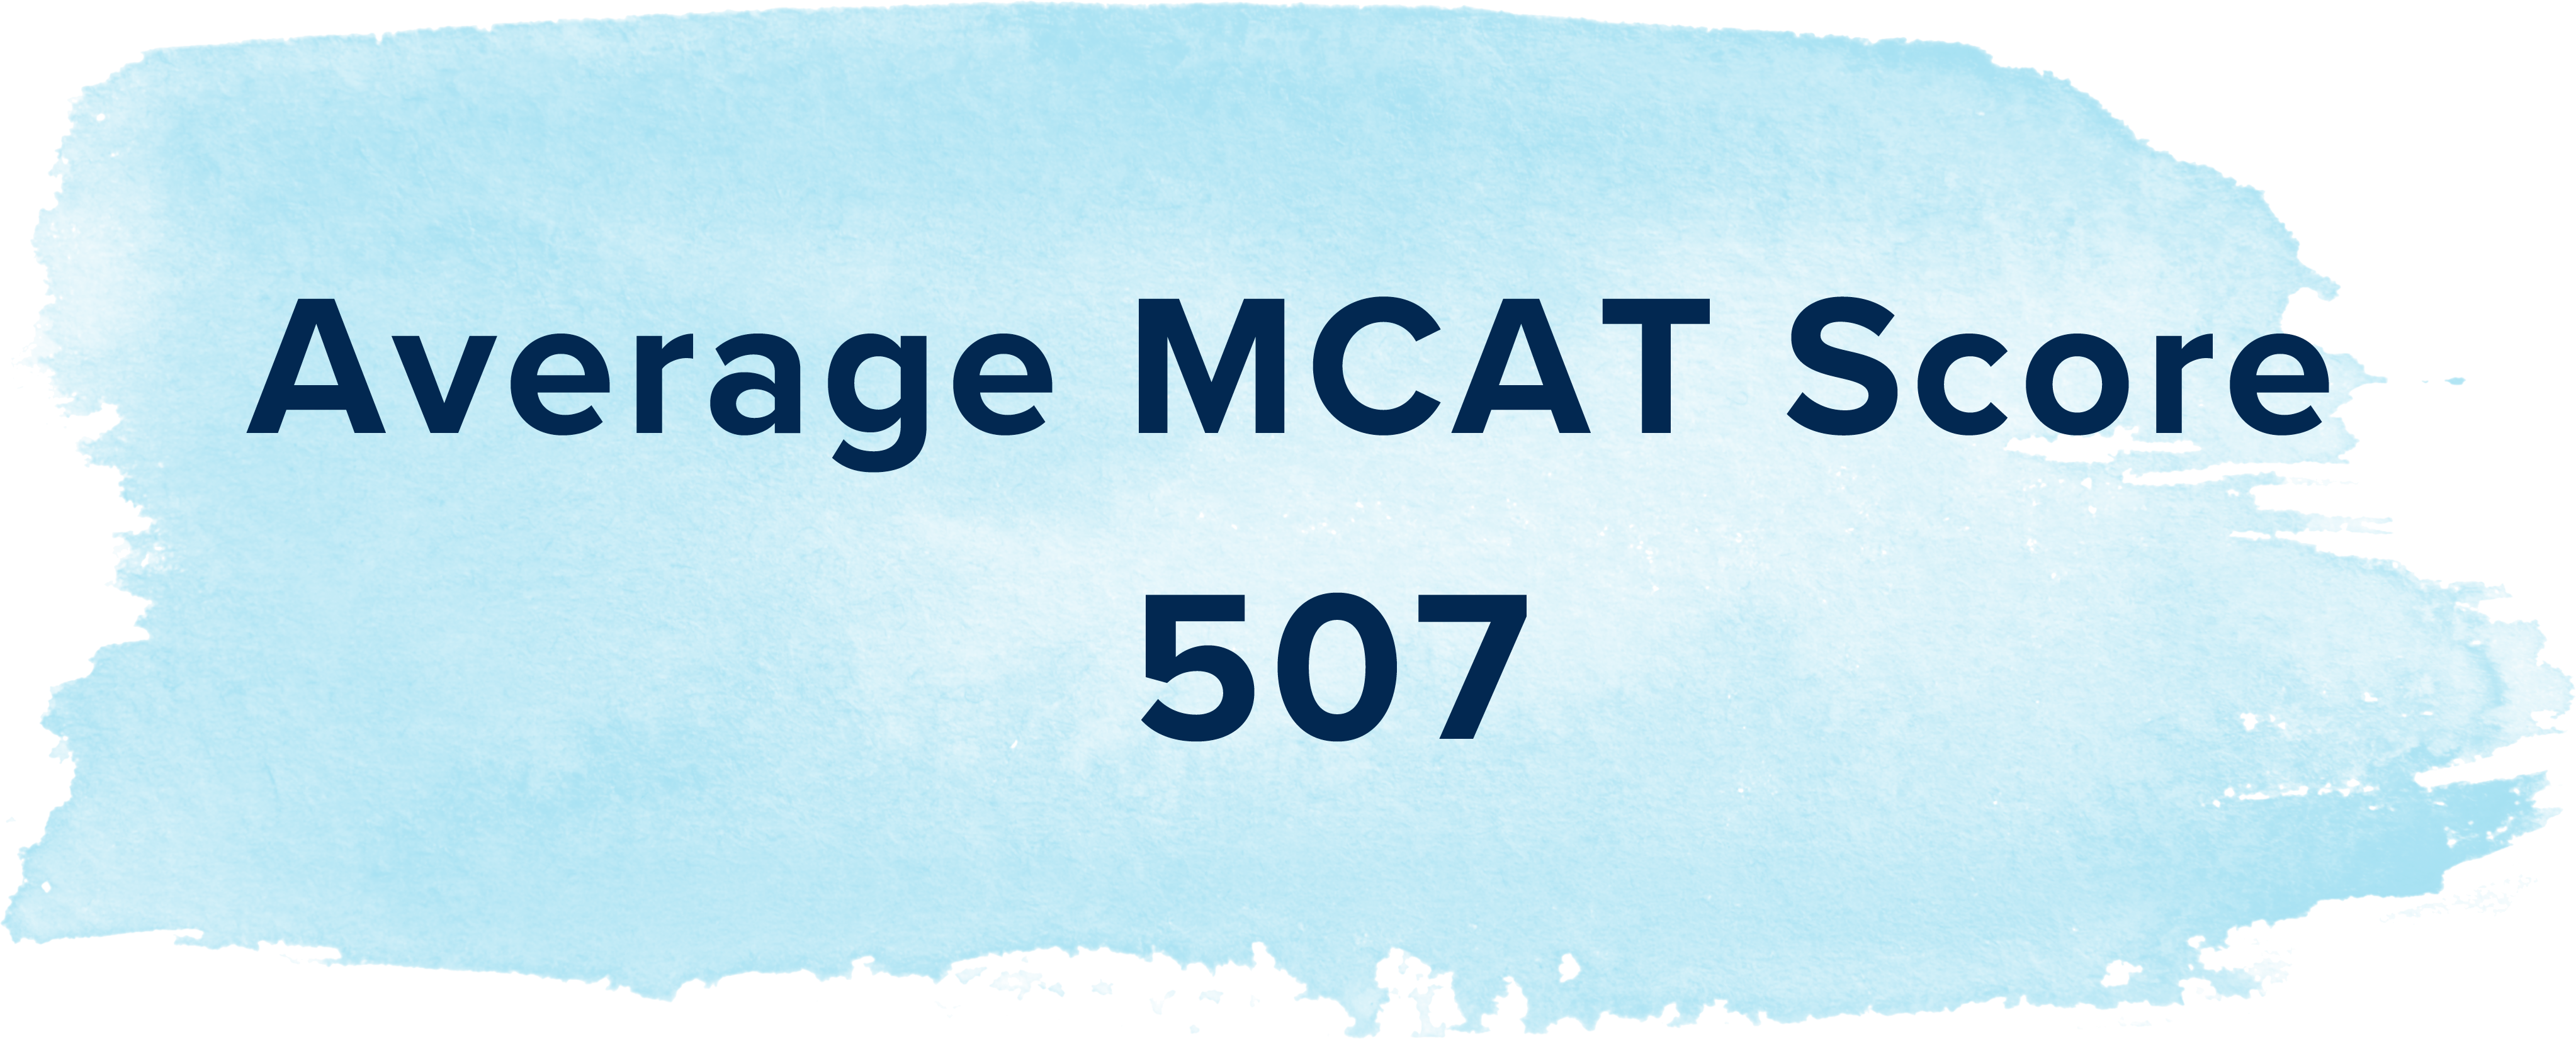 Average MCAT Score